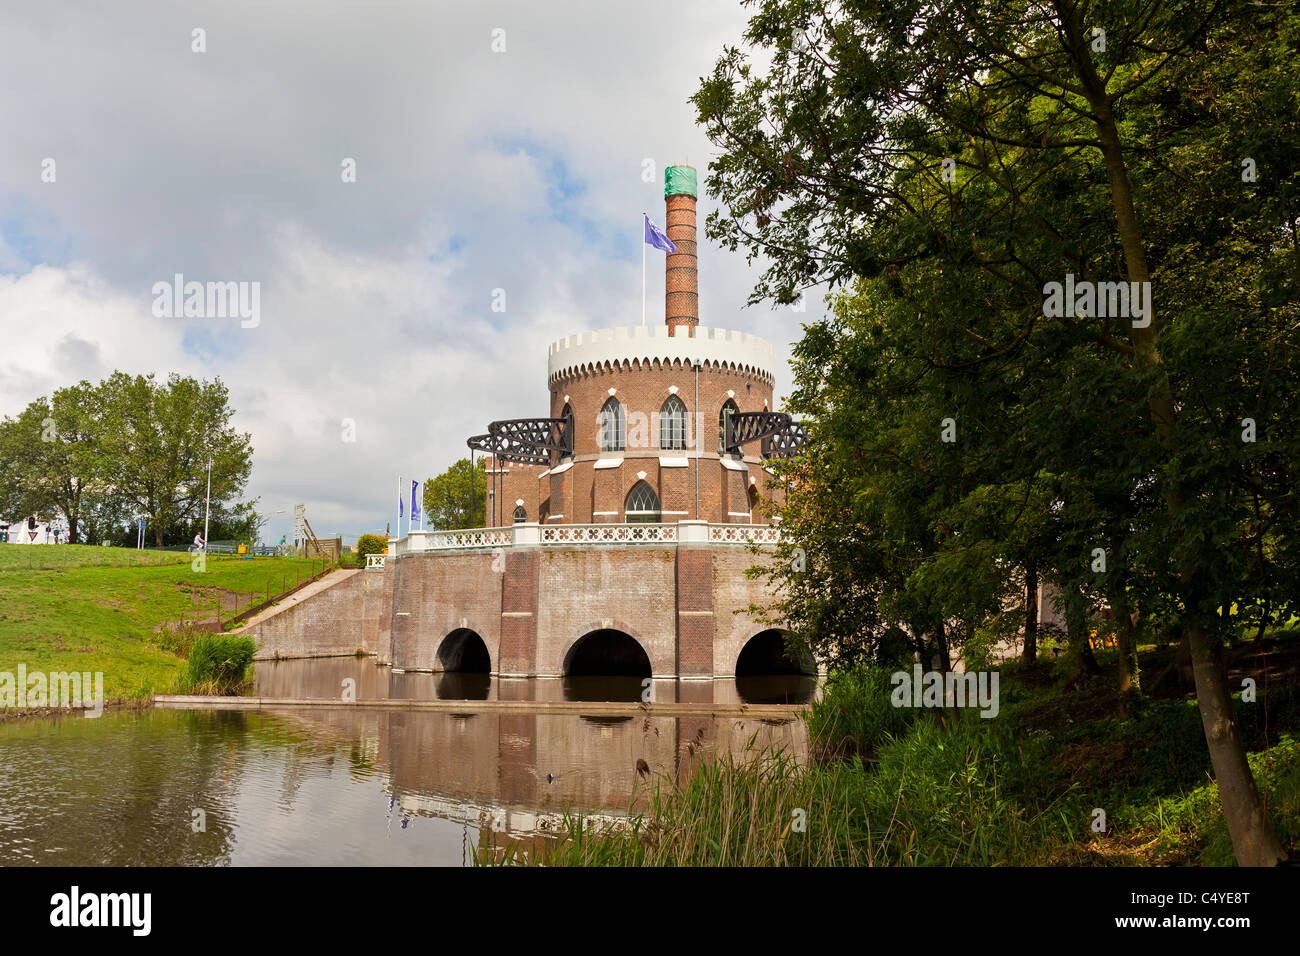 Exterior of De Cruquius steam powered water pumping station museum, Haarlemmermeer, Holland. JMH5022 Stock Photo